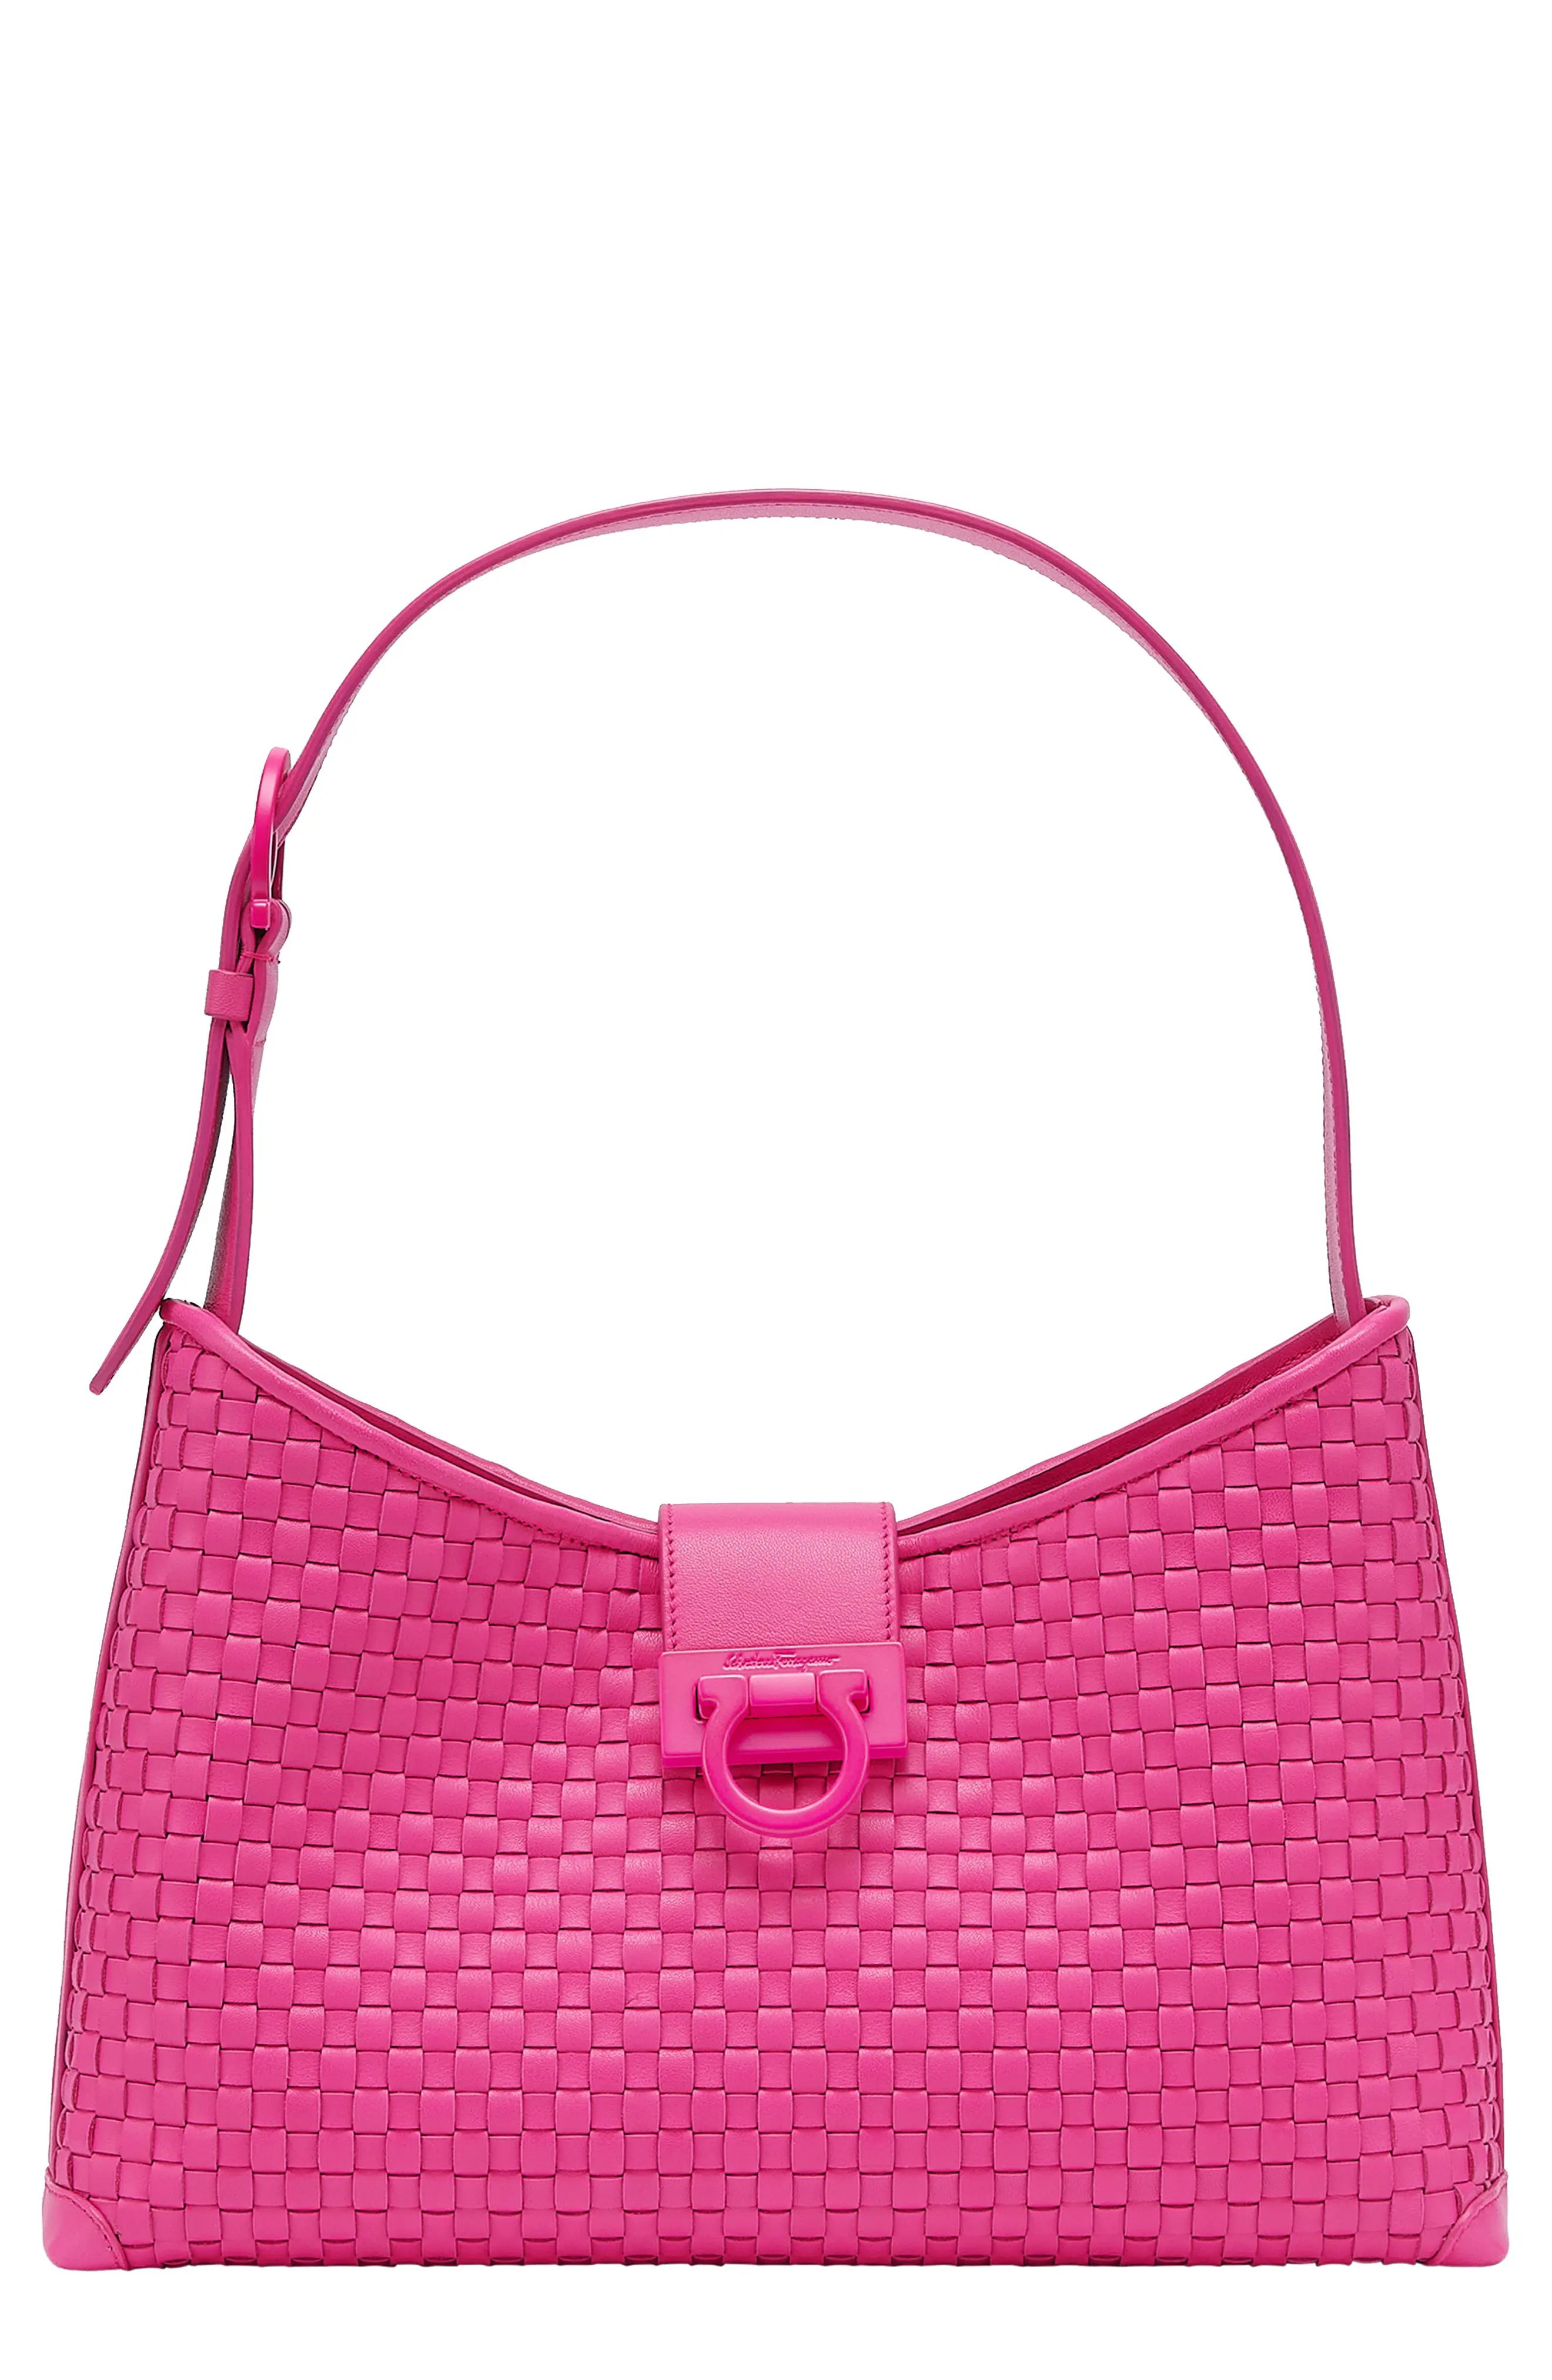 Salvatore Ferragamo Trifolio Intreccio Woven Leather Shoulder Bag in Hot Pink at Nordstrom | Nordstrom